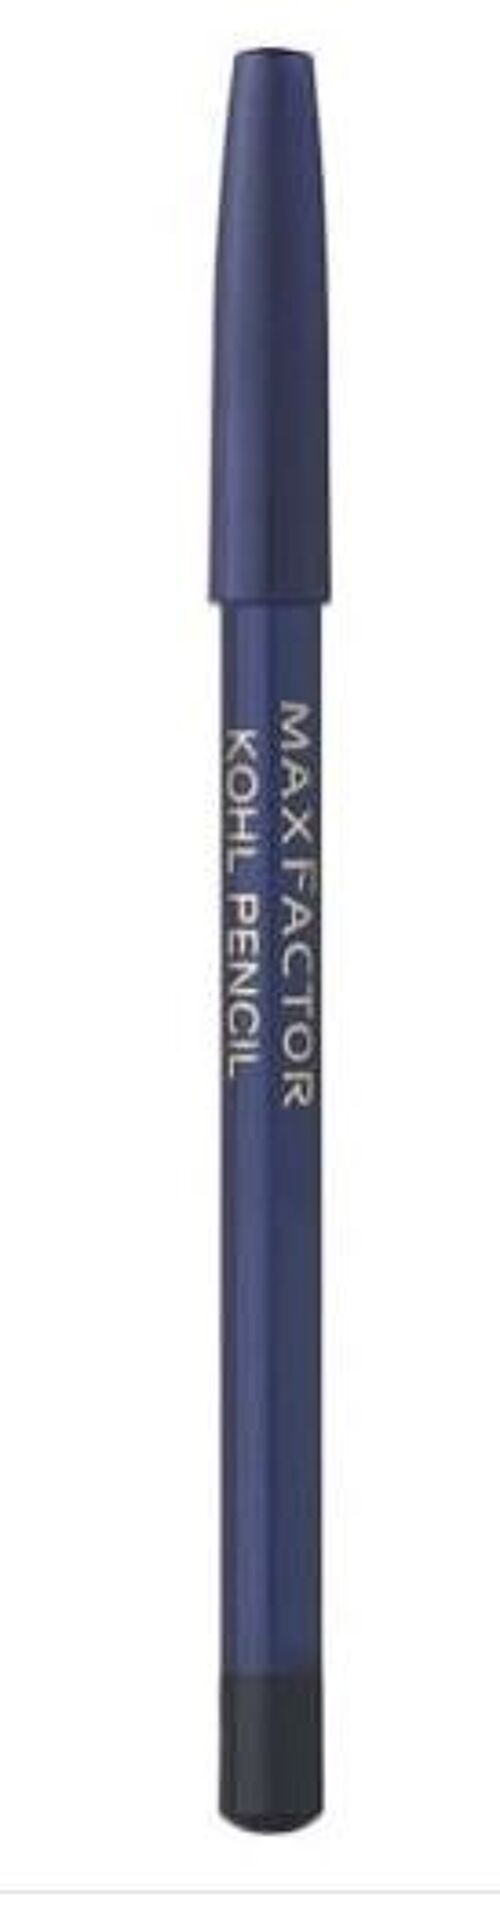 Max Factor Khol Eyeliner Pencils Black